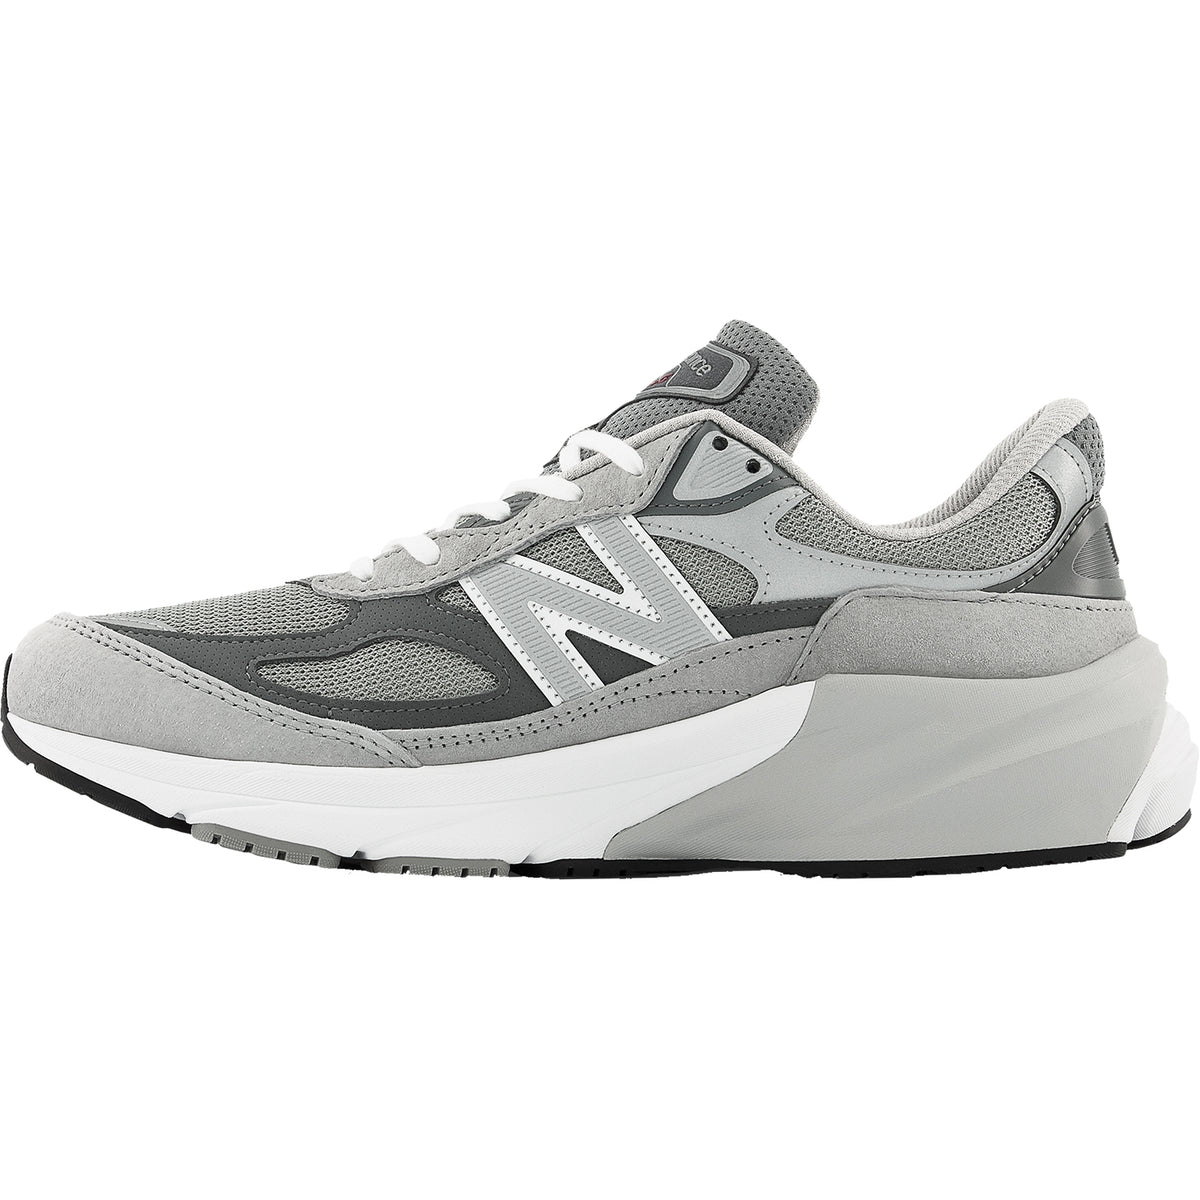 New Balance W990v6 | Women's Running Shoes | Footwear etc.